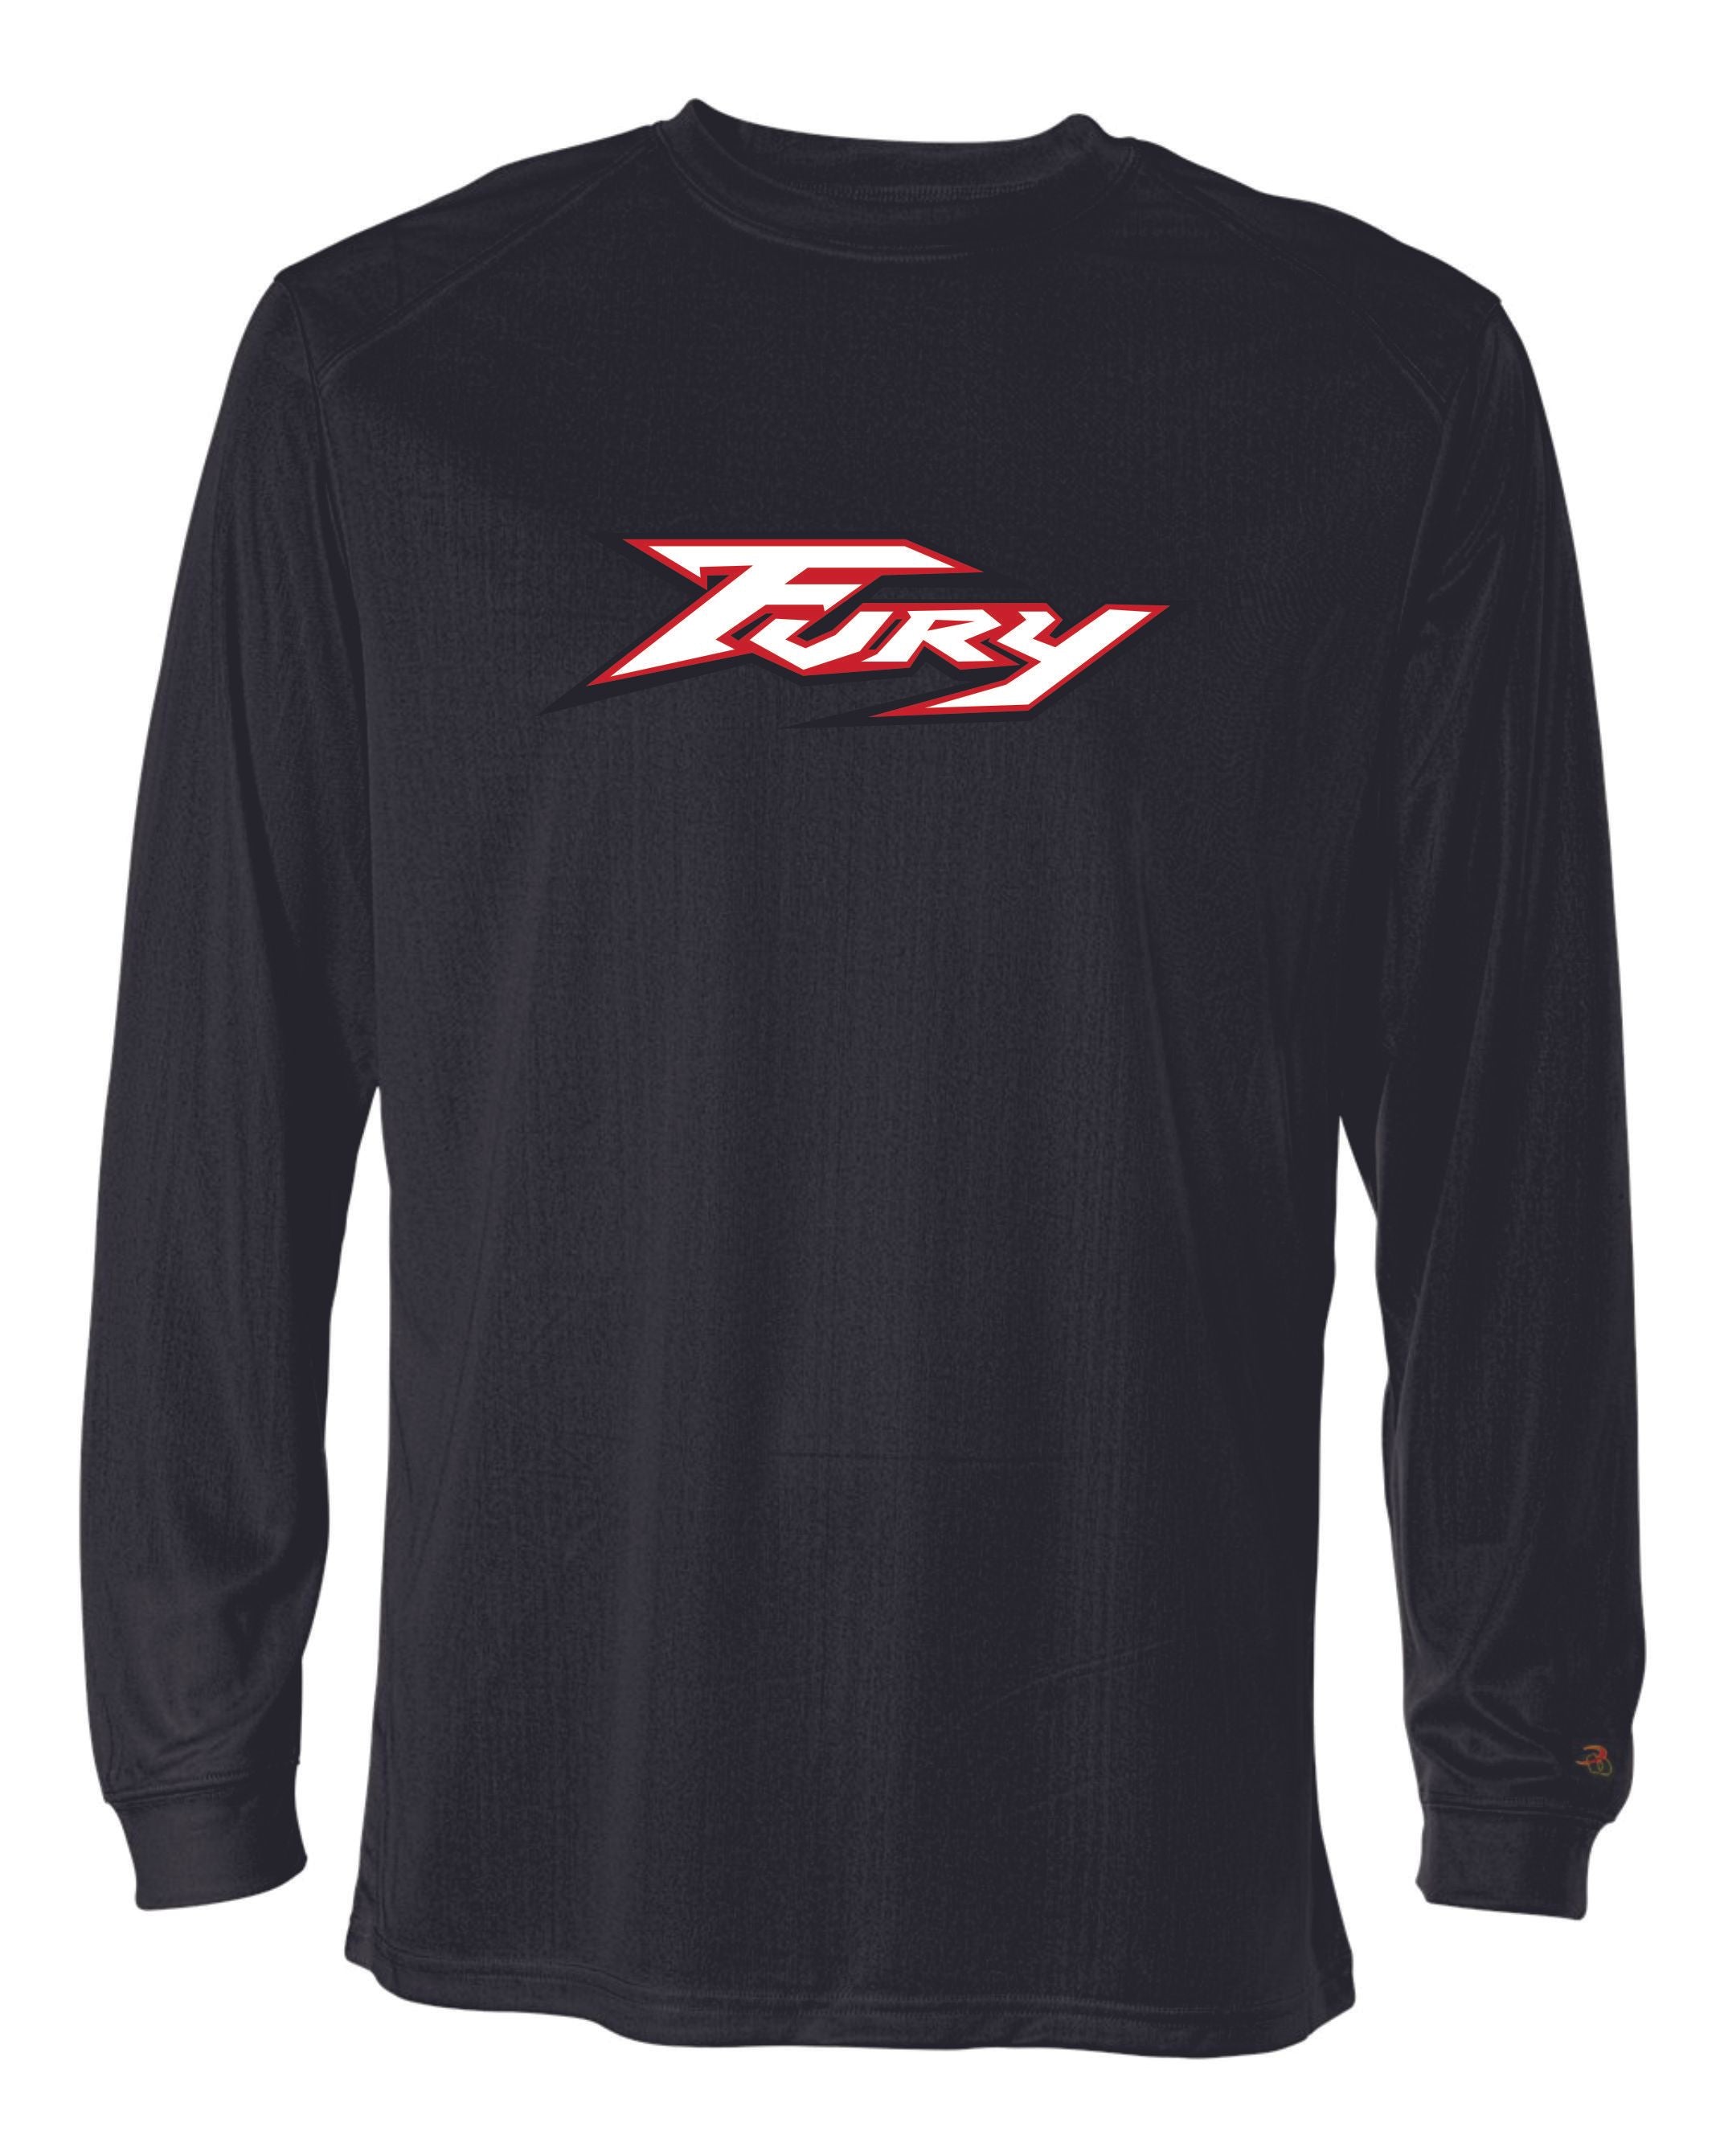 Fury Long Sleeve Badger Dri Fit Shirt WOMEN